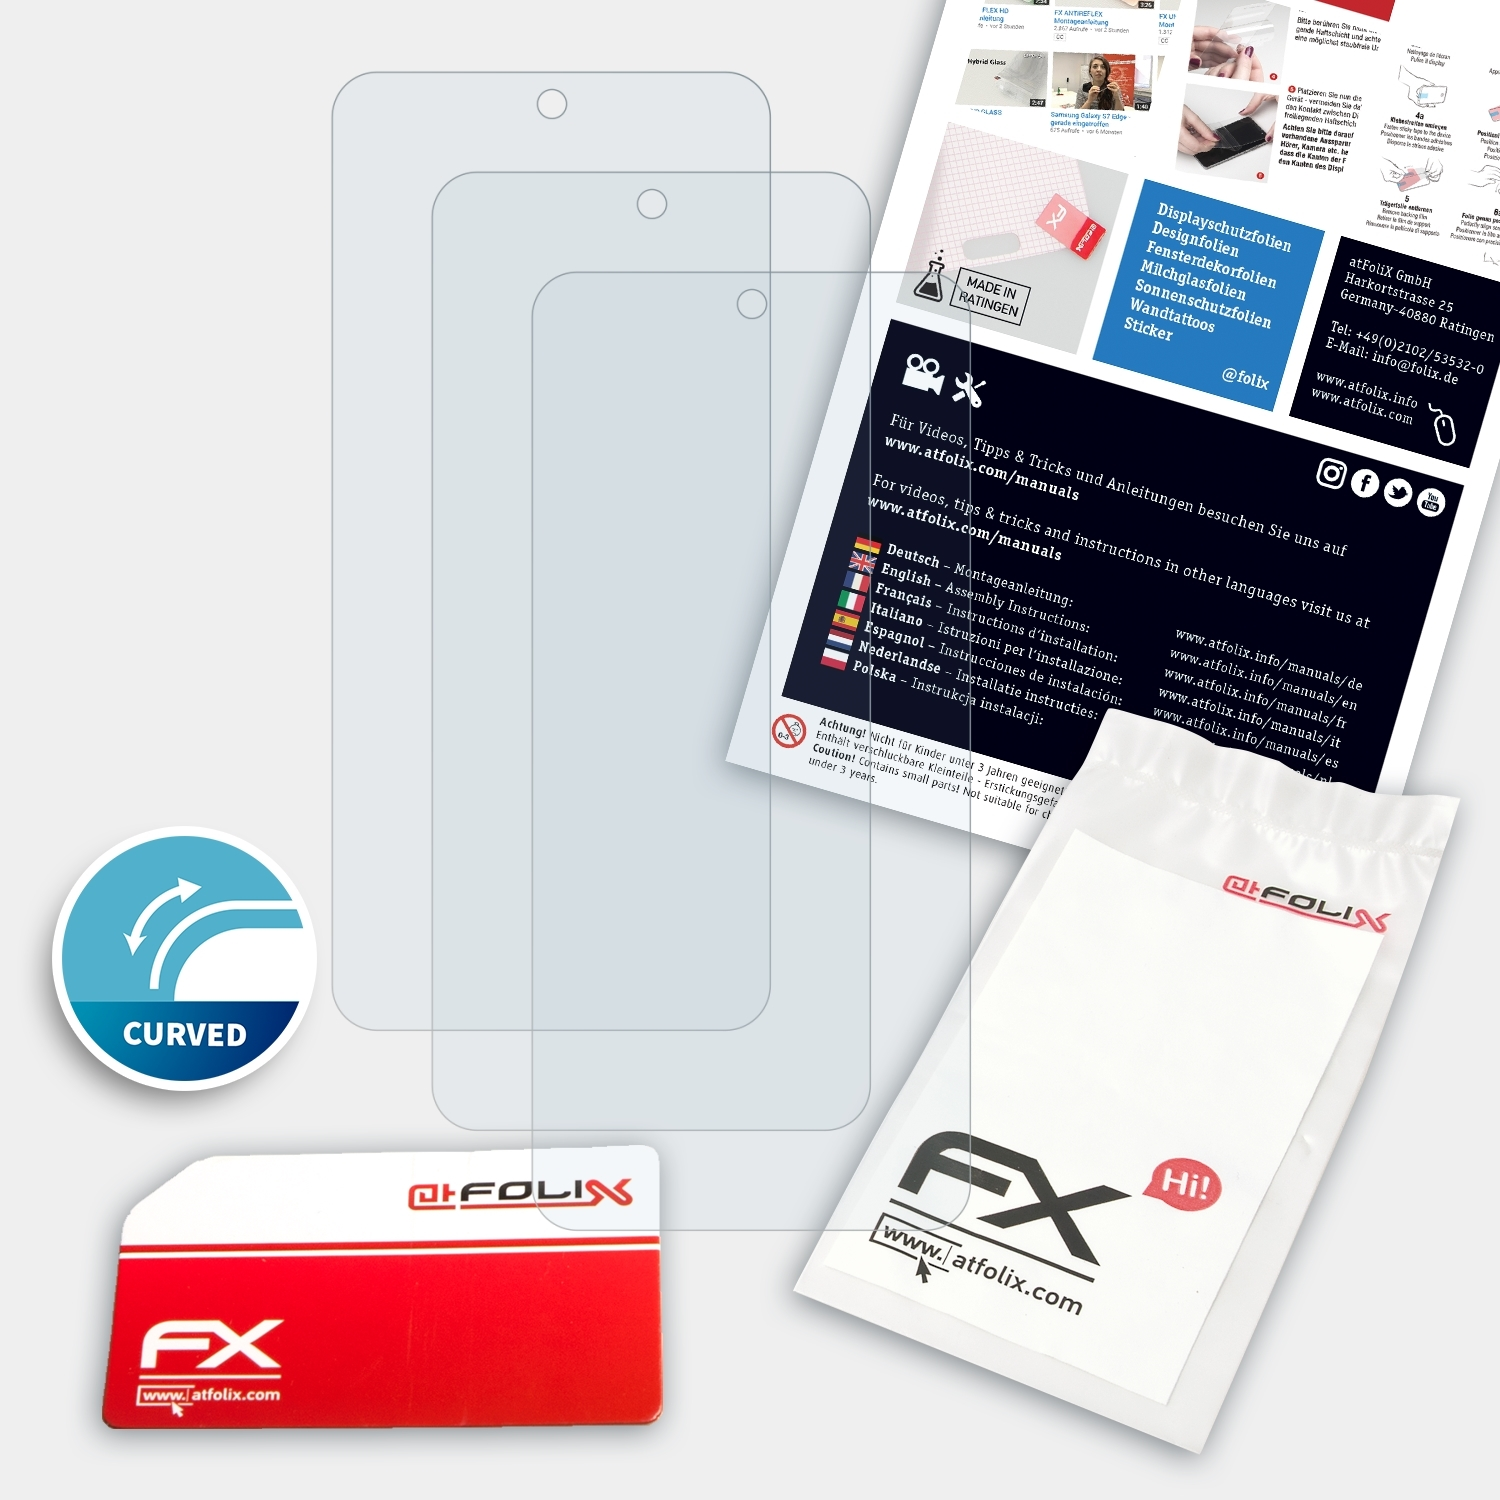 SE) FX-ActiFleX Displayschutz(für Huawei Nova ATFOLIX 3x 10